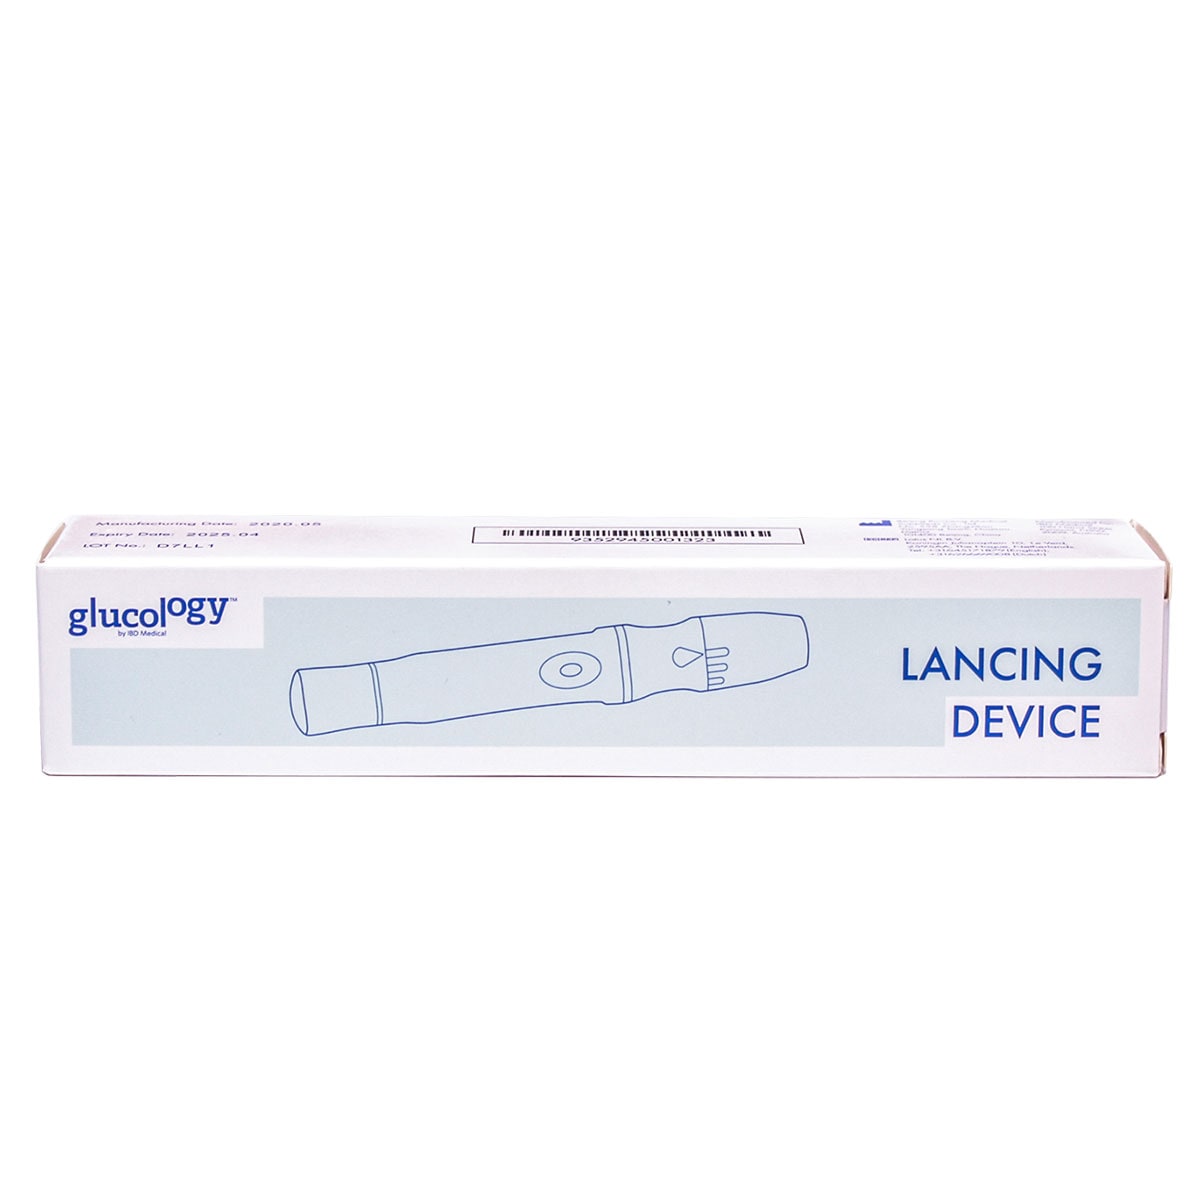 Glucology 9 Depth Lancing Device